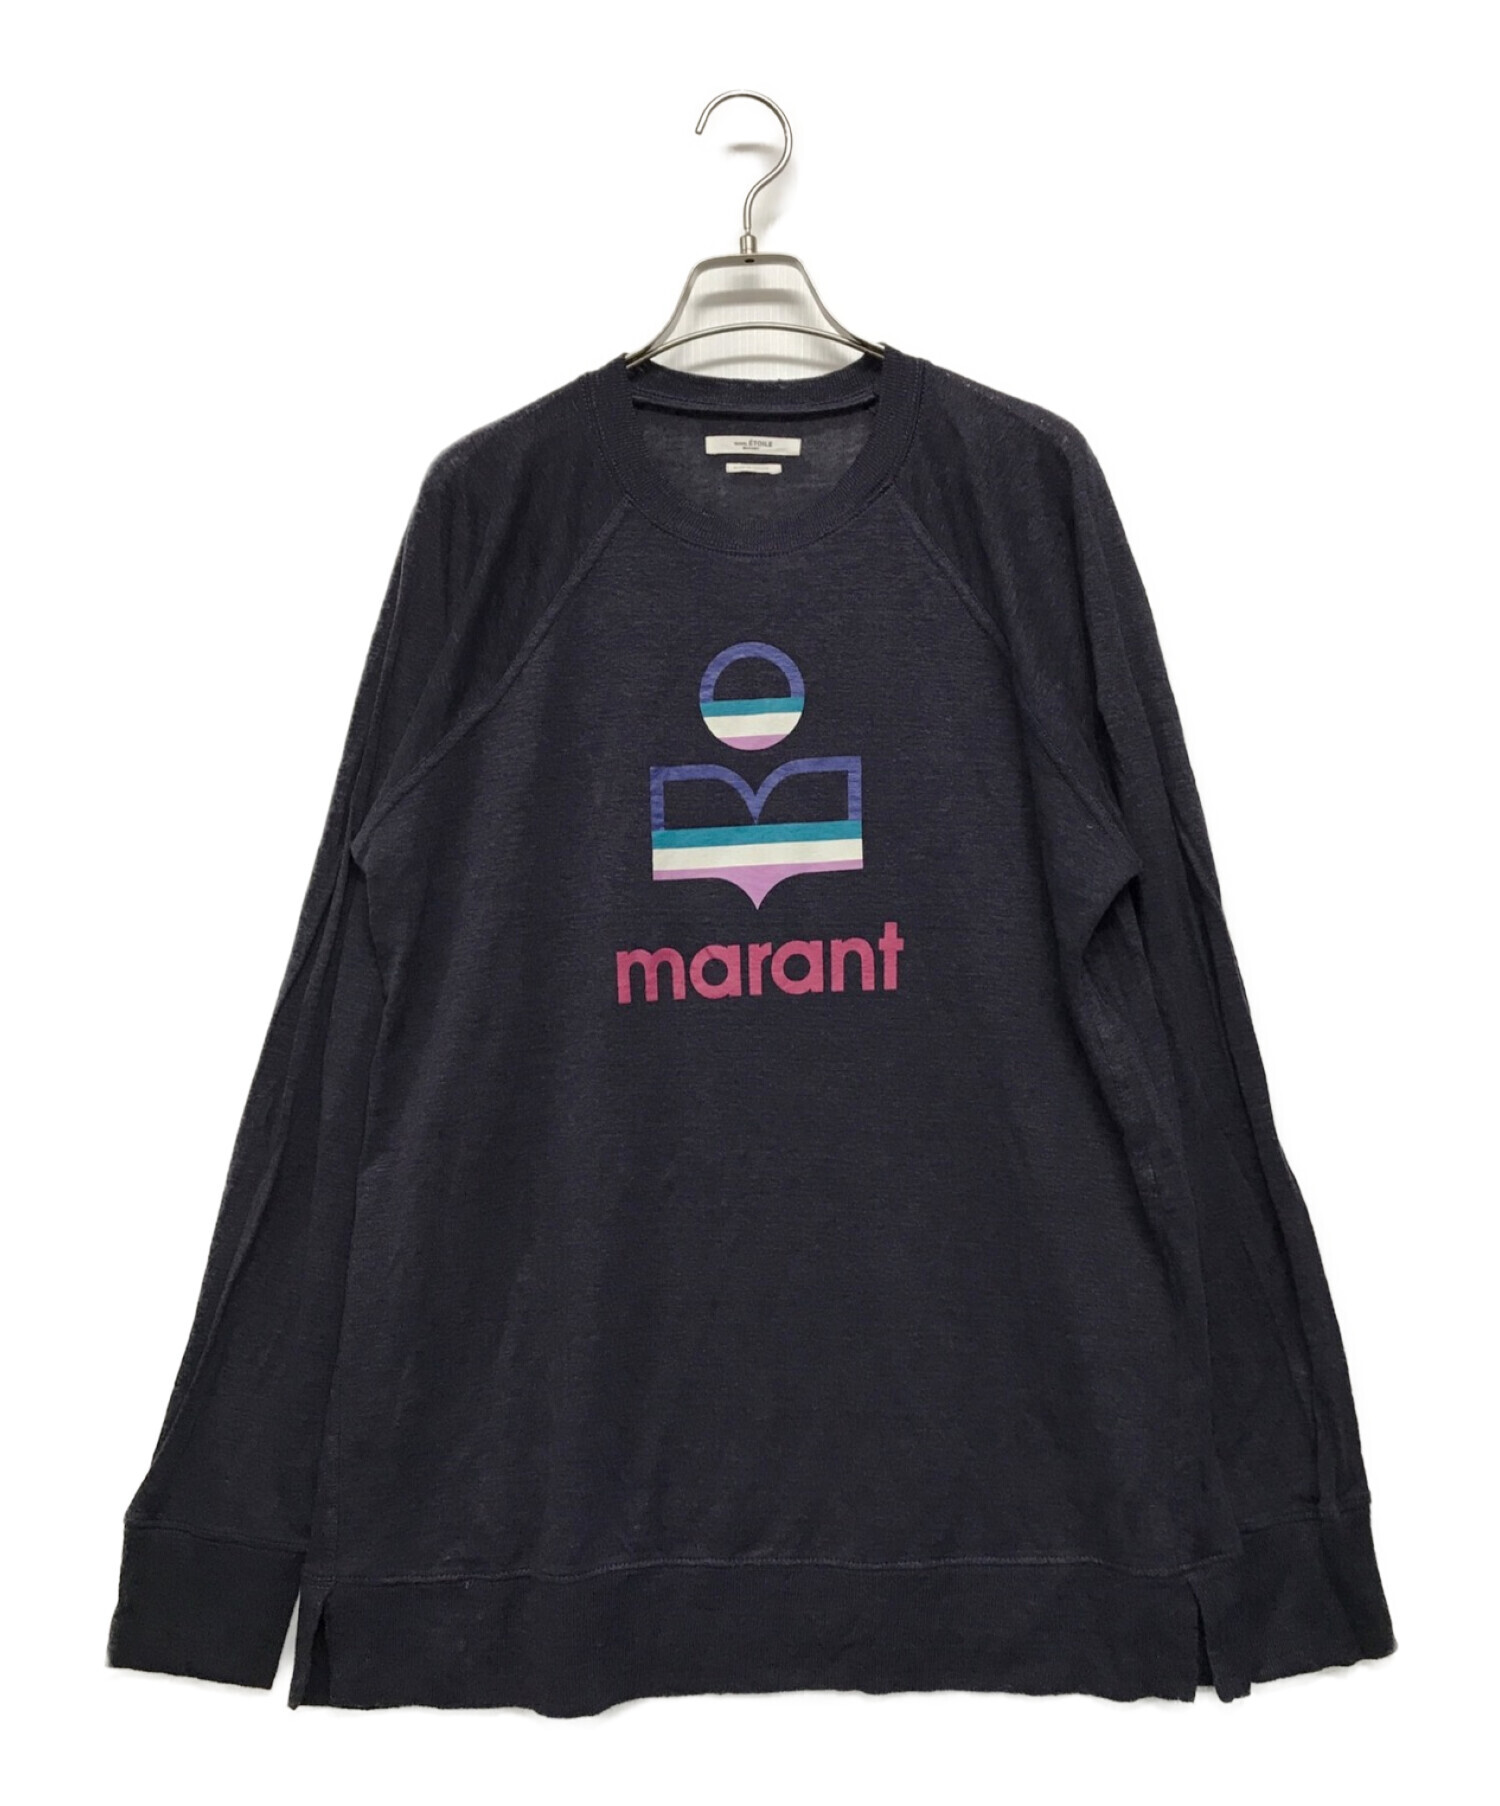 ISABEL MARANT ETOILE (イザベルマランエトワール) ロゴ ロングTシャツ パープル サイズ:SIZE S